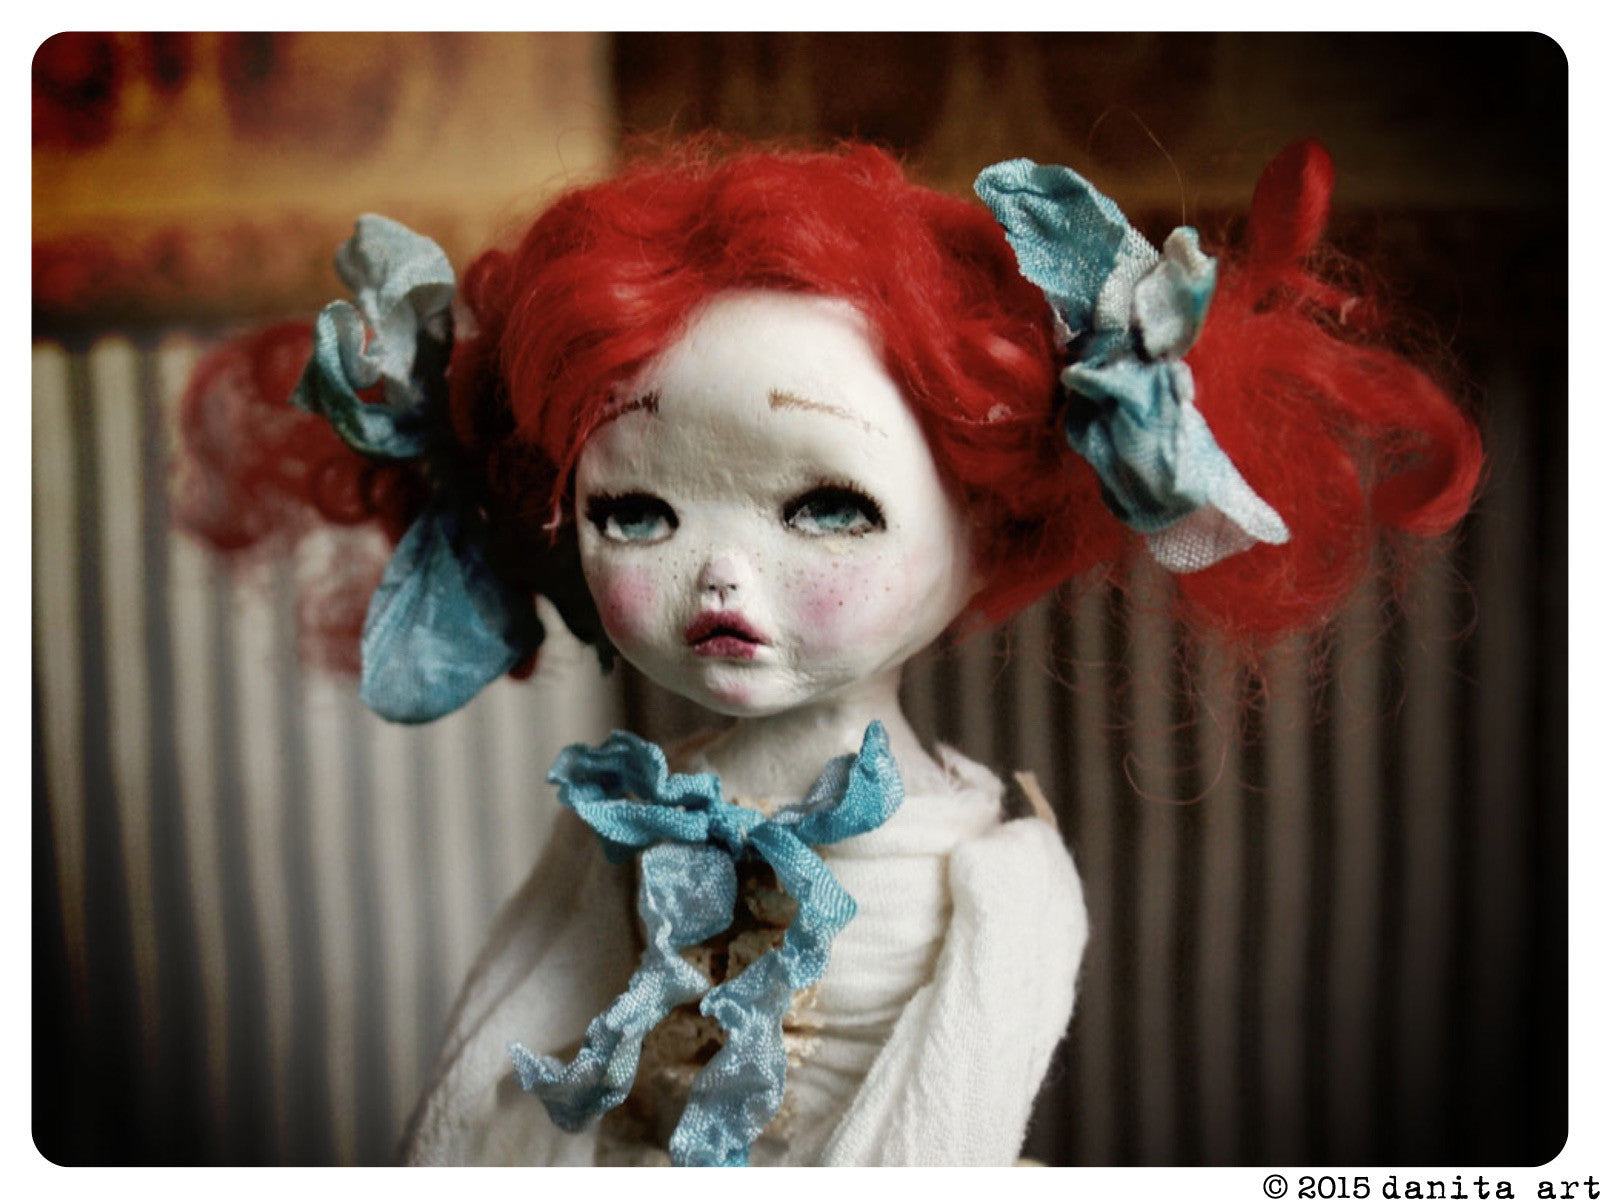 Garnet, Art Doll by Danita Art